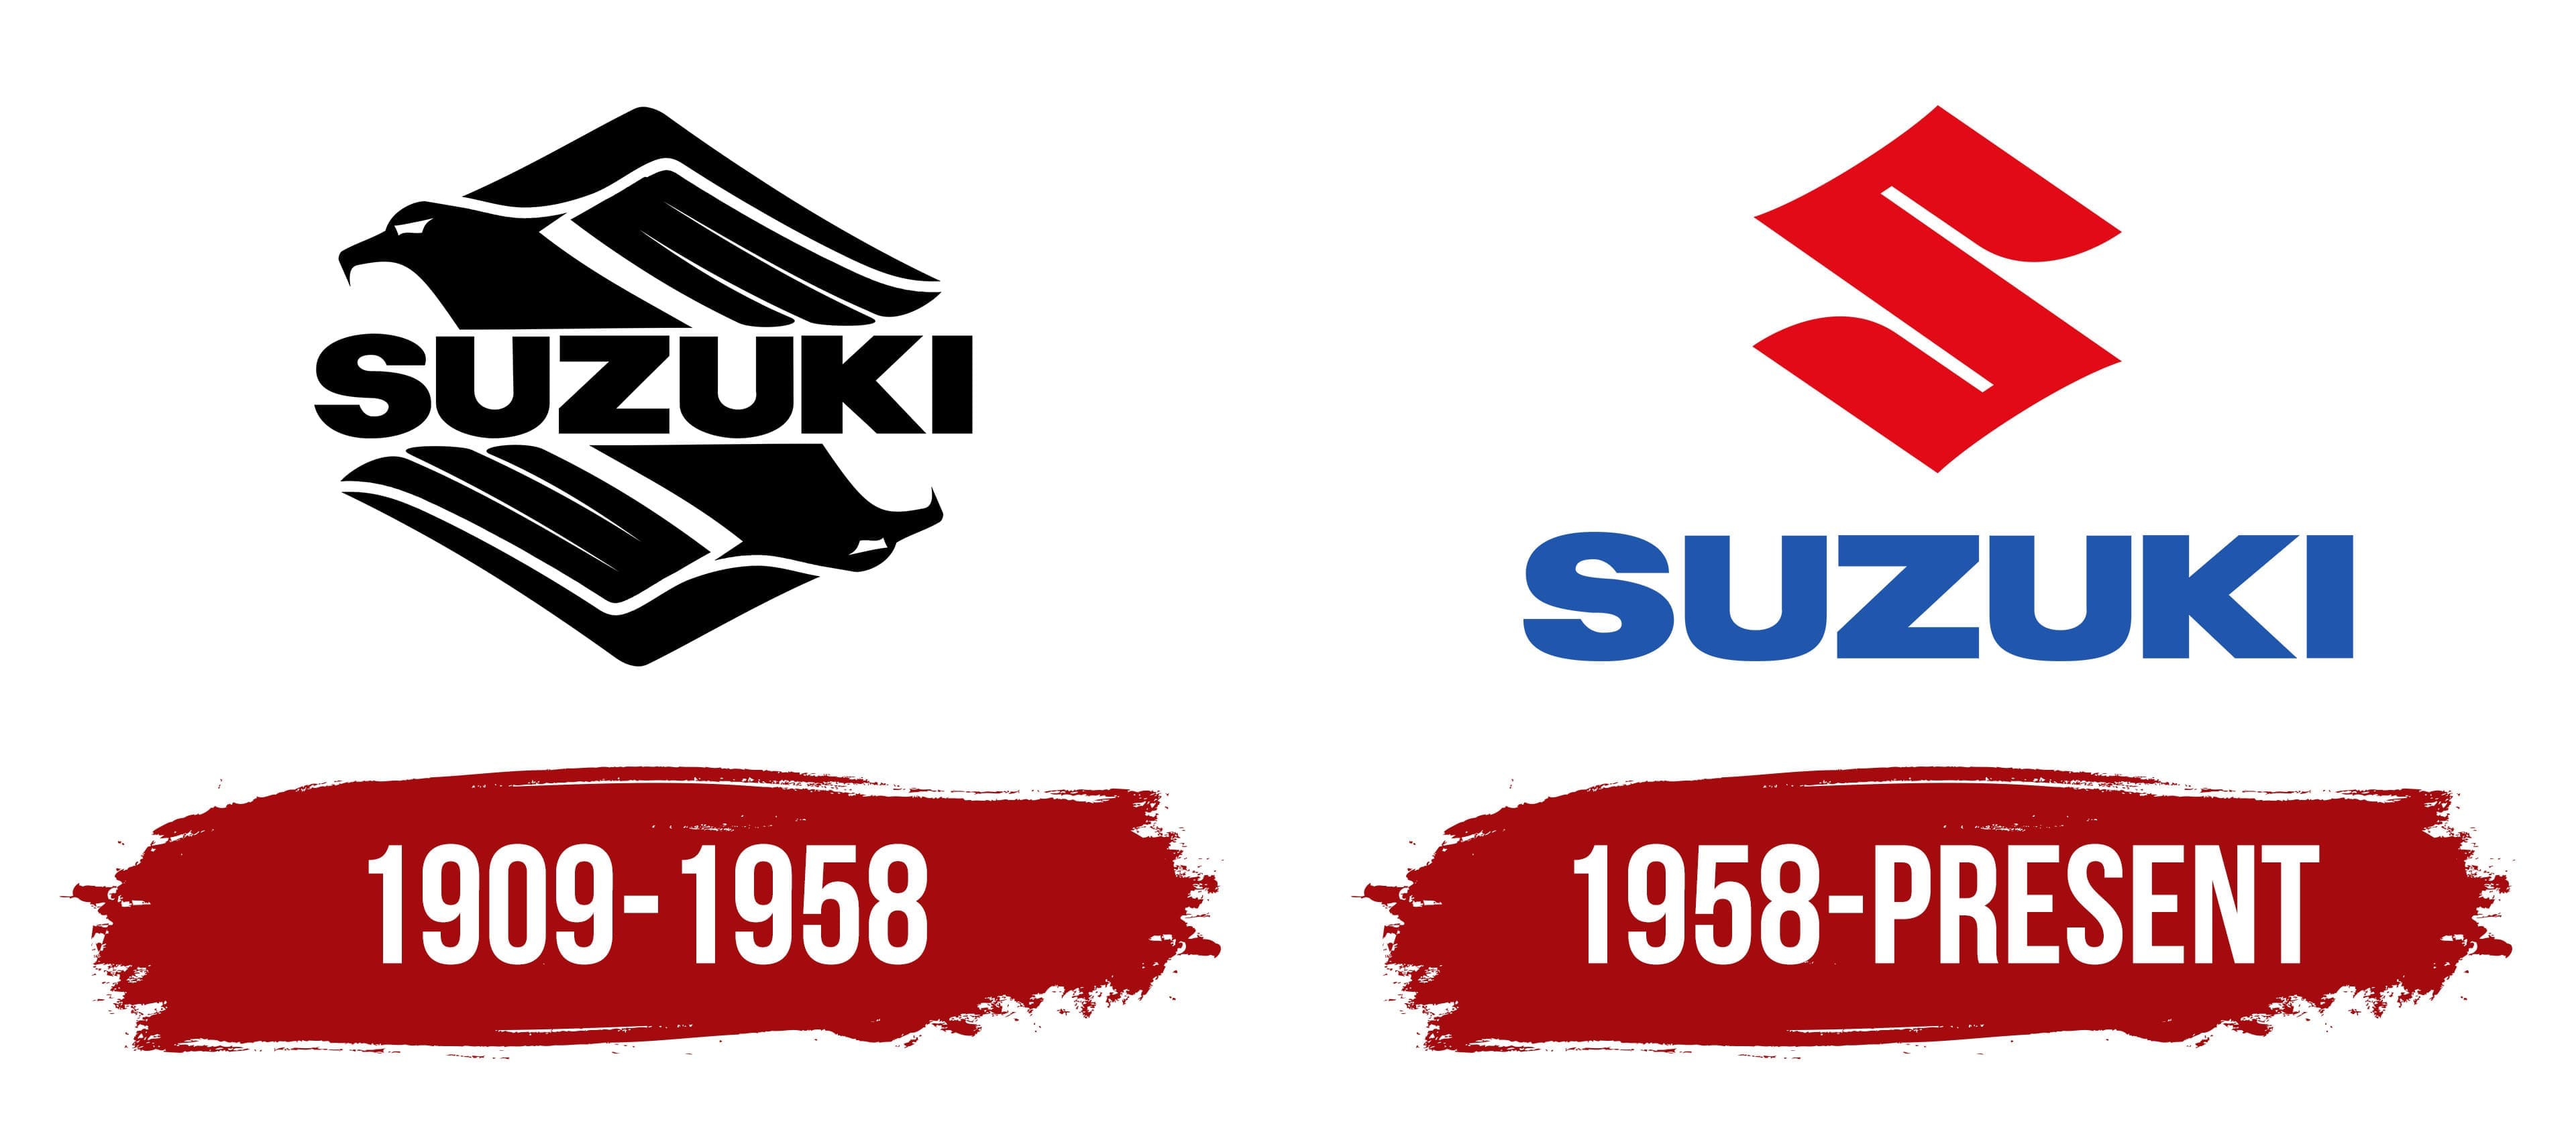 Suzuki logo animation. - YouTube